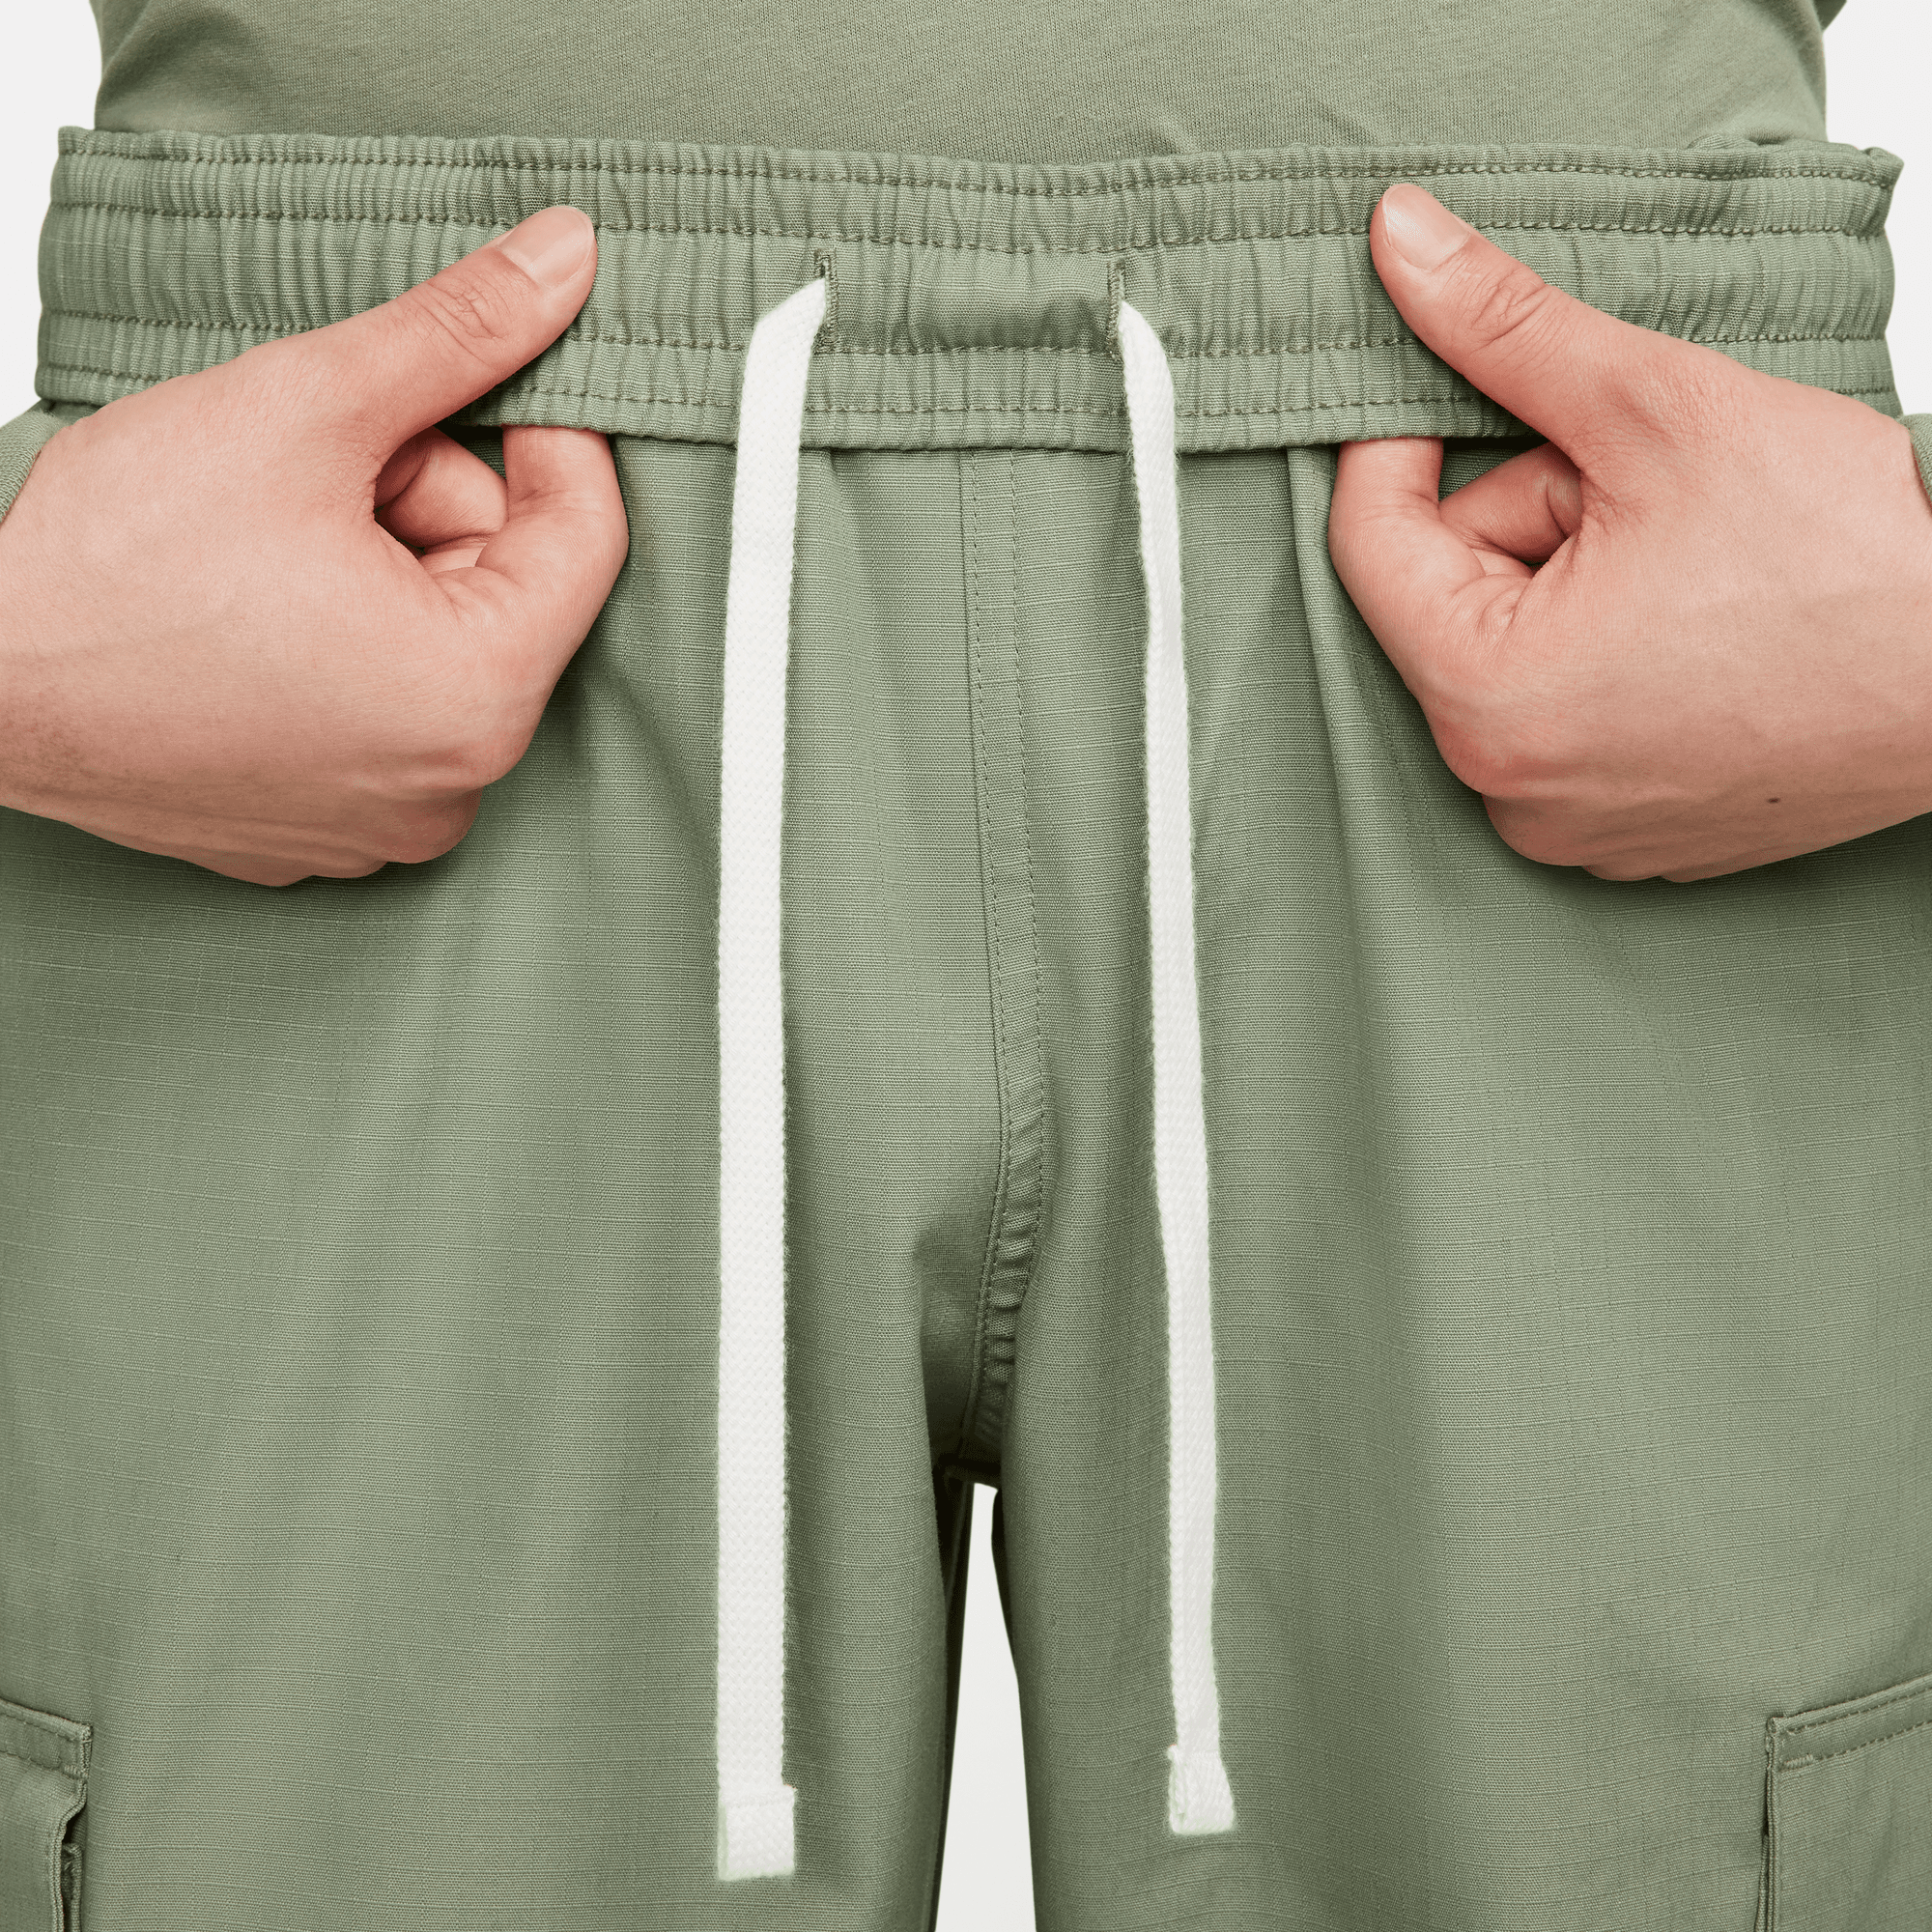 Nike Tech Men's Lined Woven Pants.